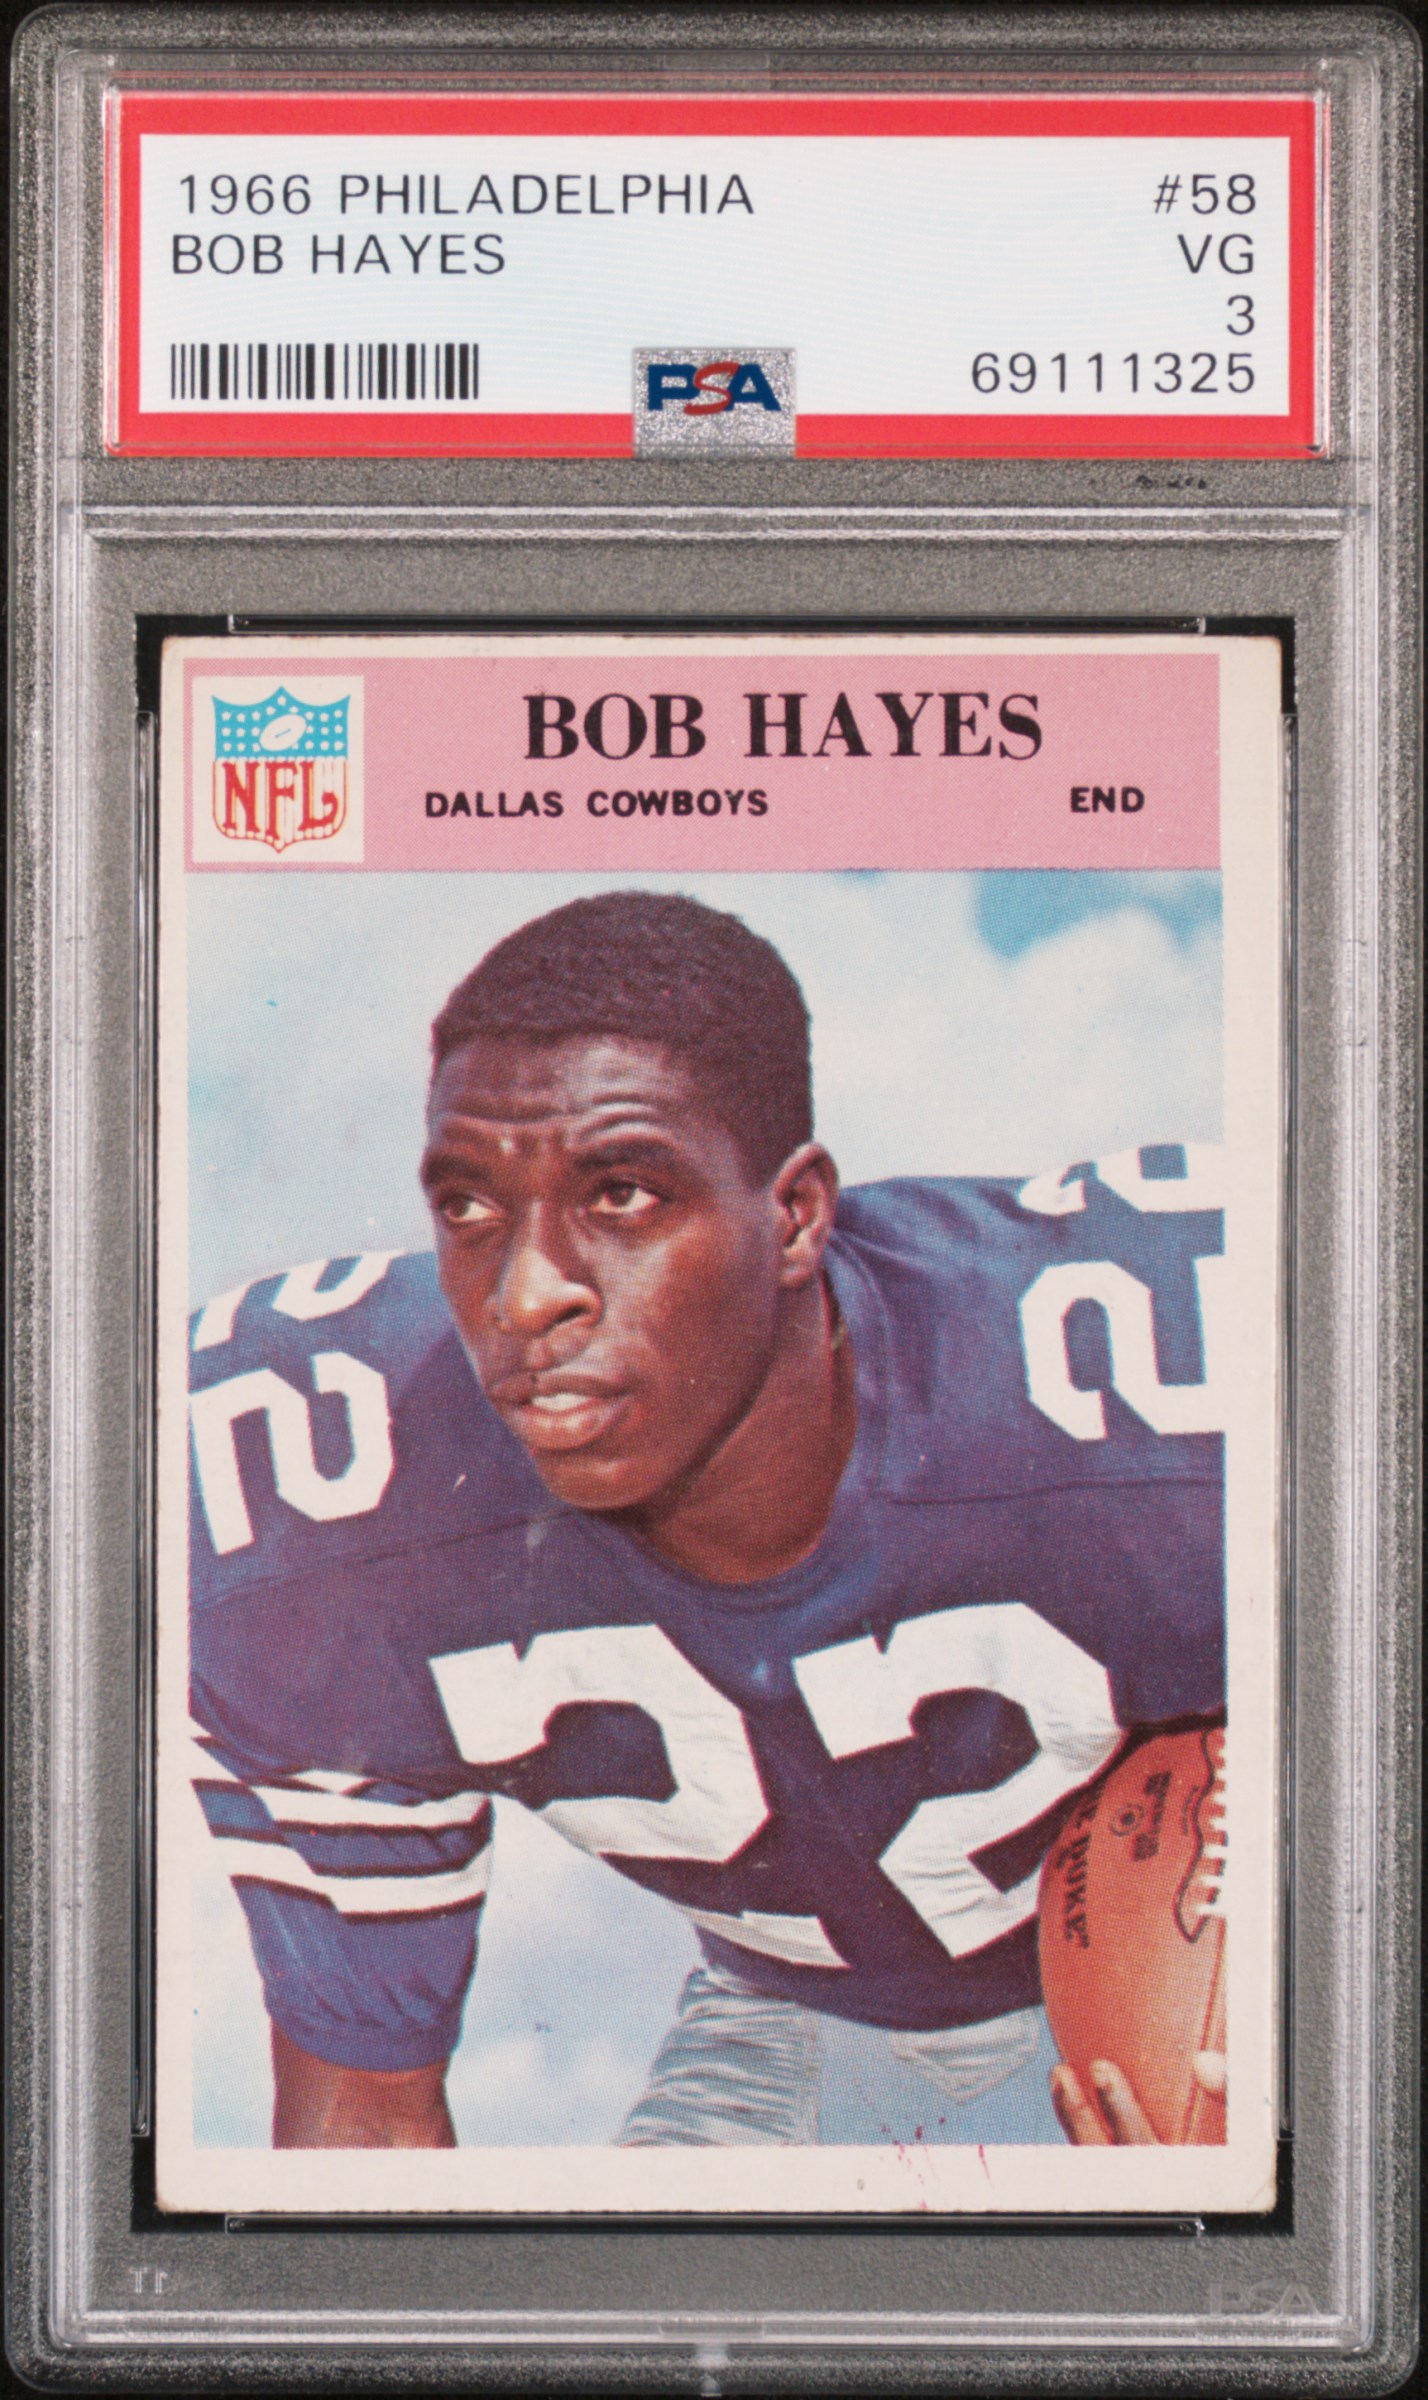 1966 Philadelphia #58 Bob Hayes Rookie Card – PSA VG 3